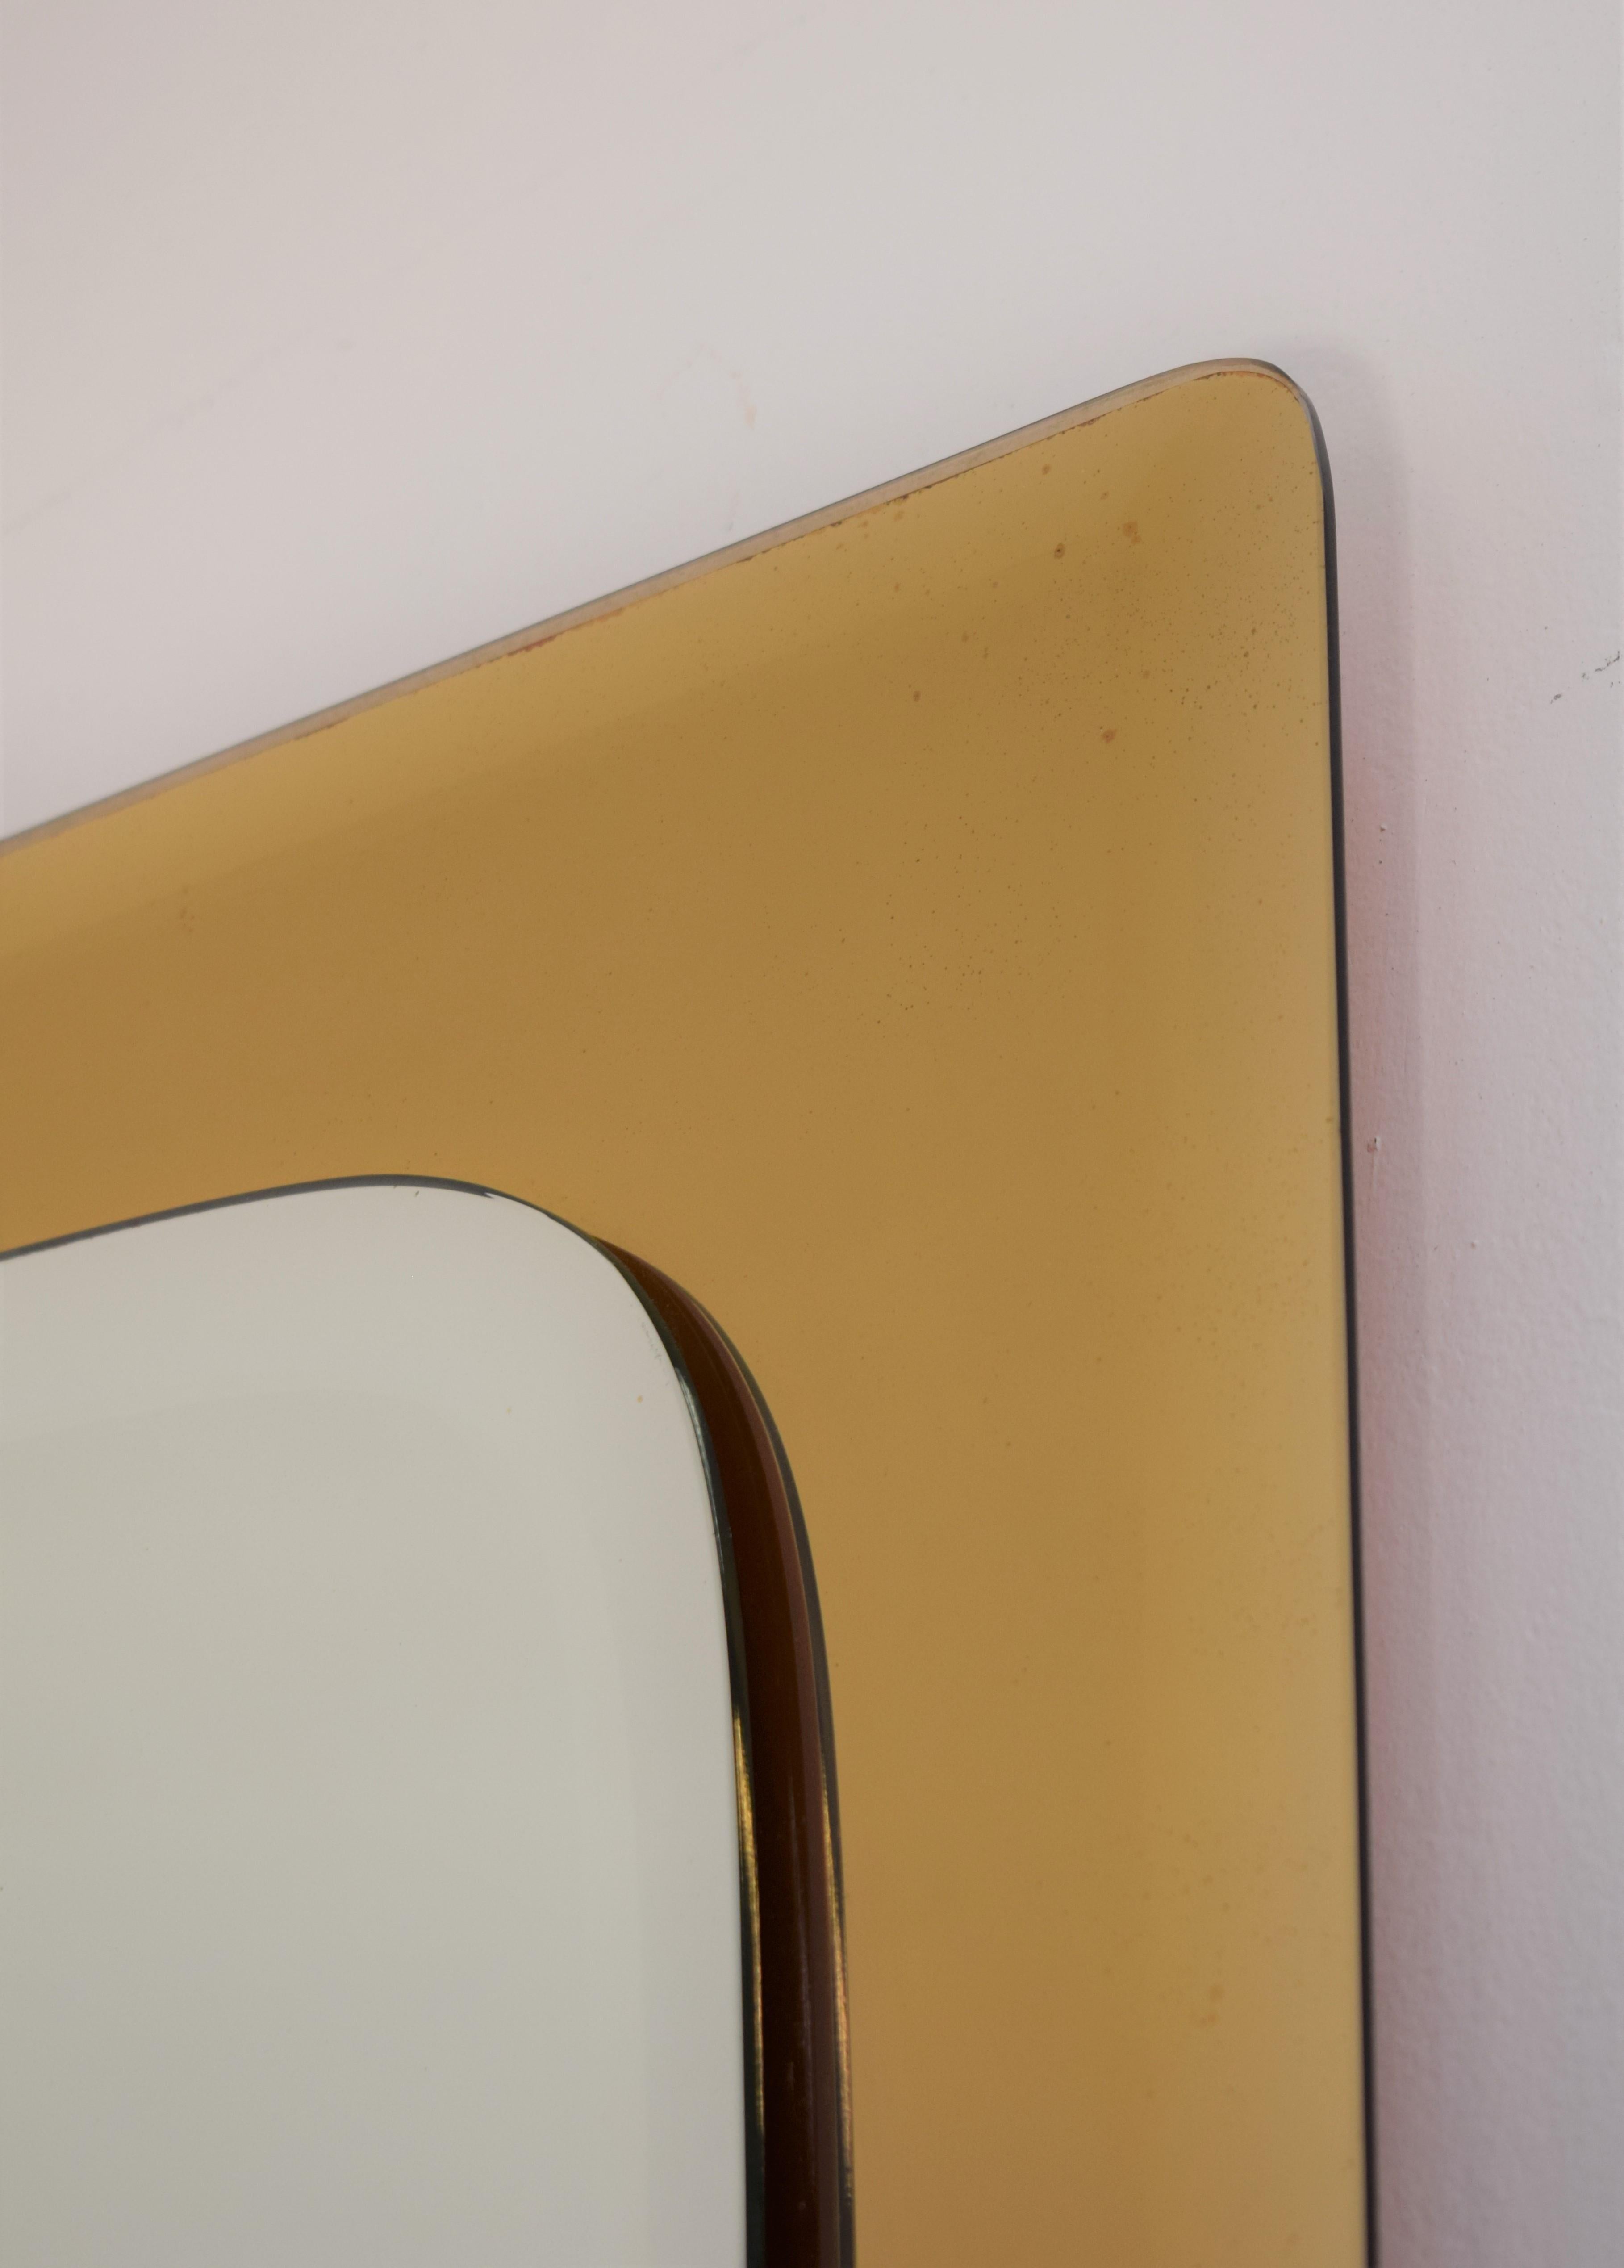 Italian wall mirror in the style of Fontana Arte, 1960s.
Dimensions: H= 90 cm; W= 70 cm; D= 1 cm.
  